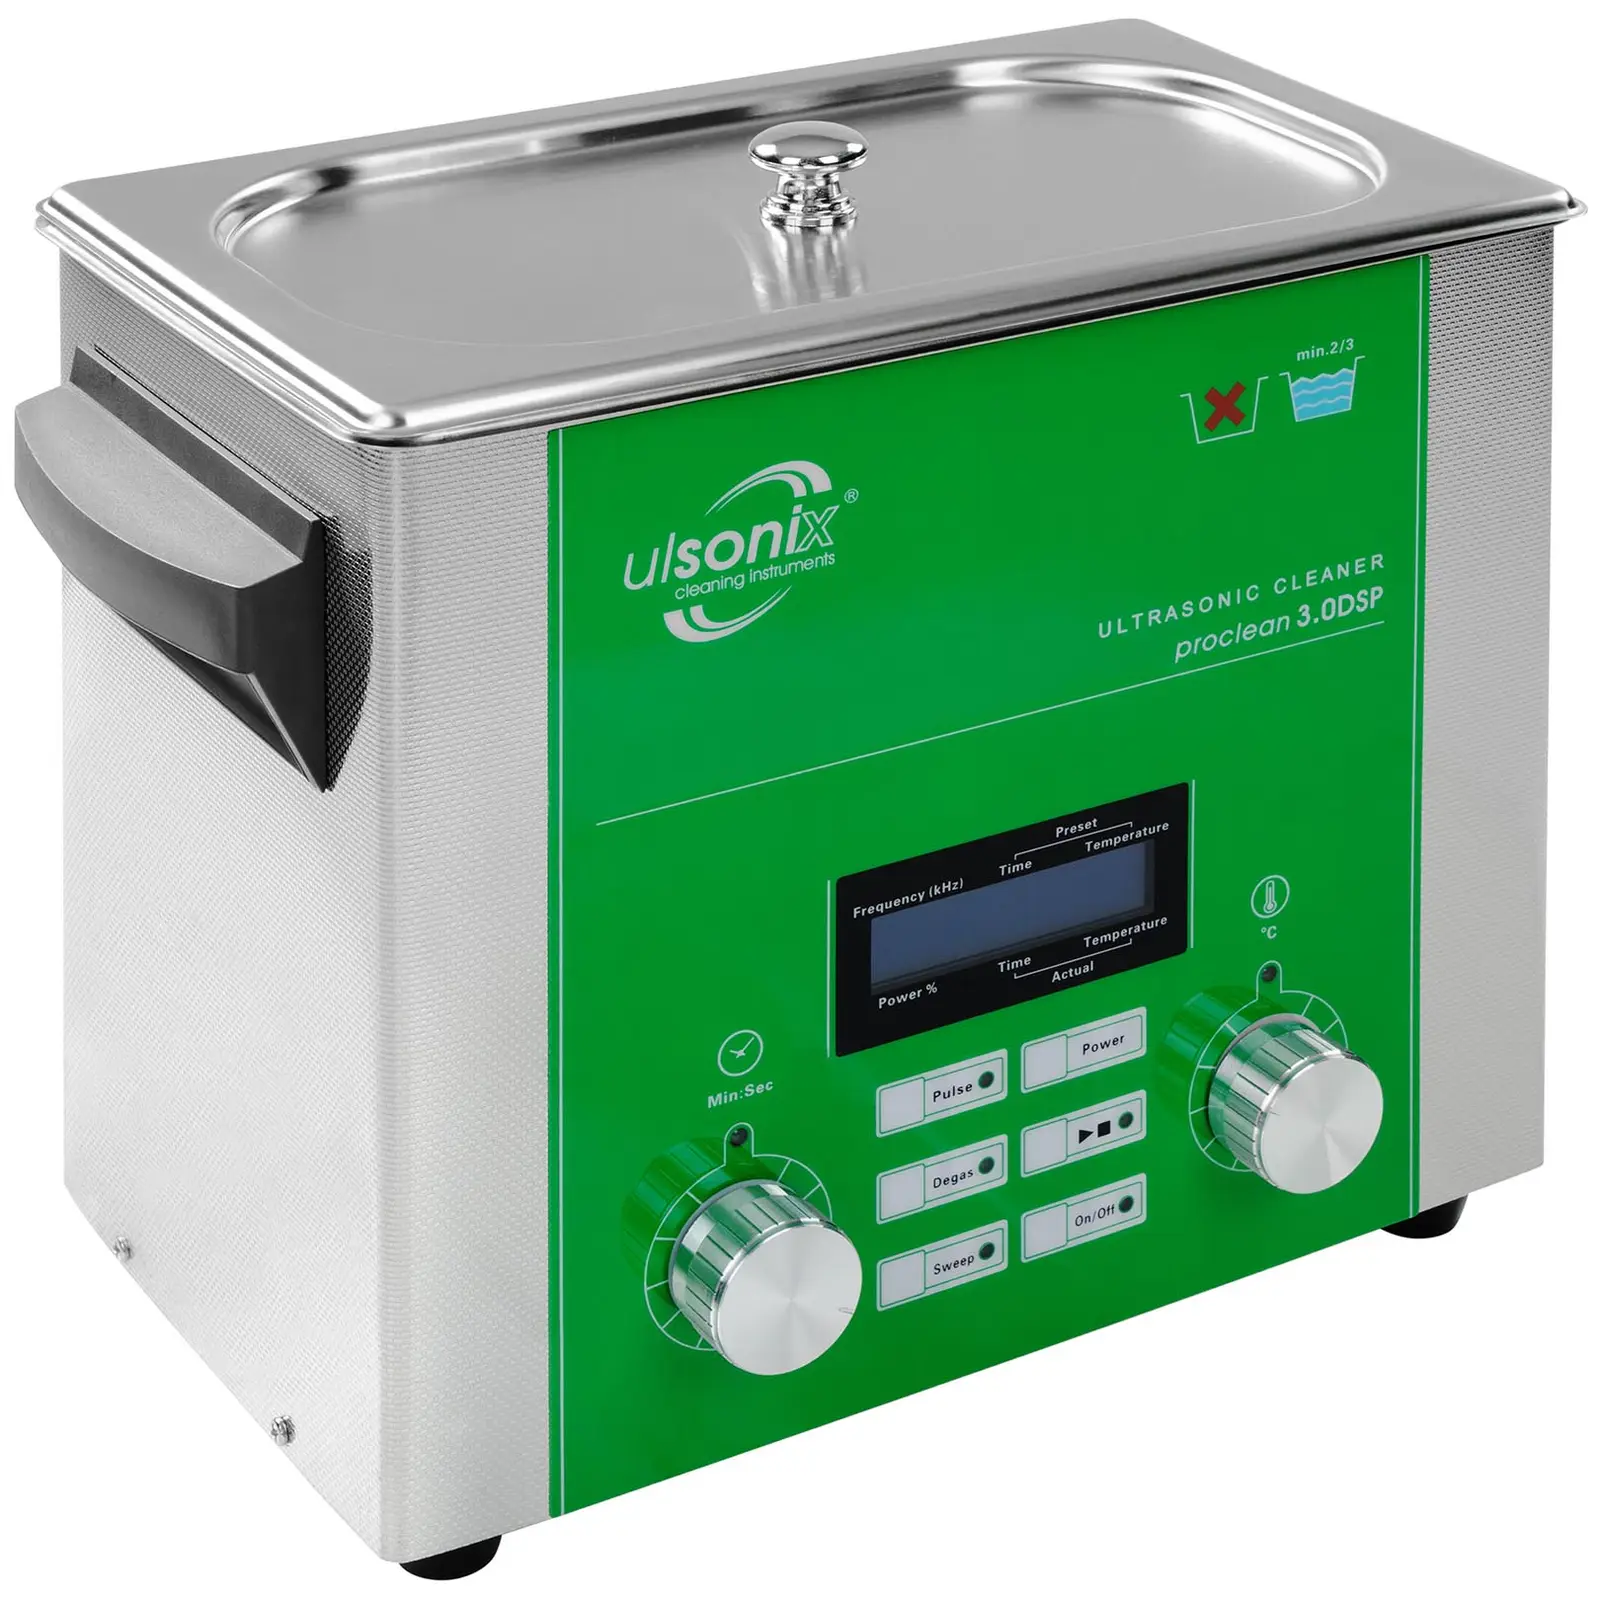 Limpiador por ultrasonidos - 3 litros - desgasificación - barrido - pulso